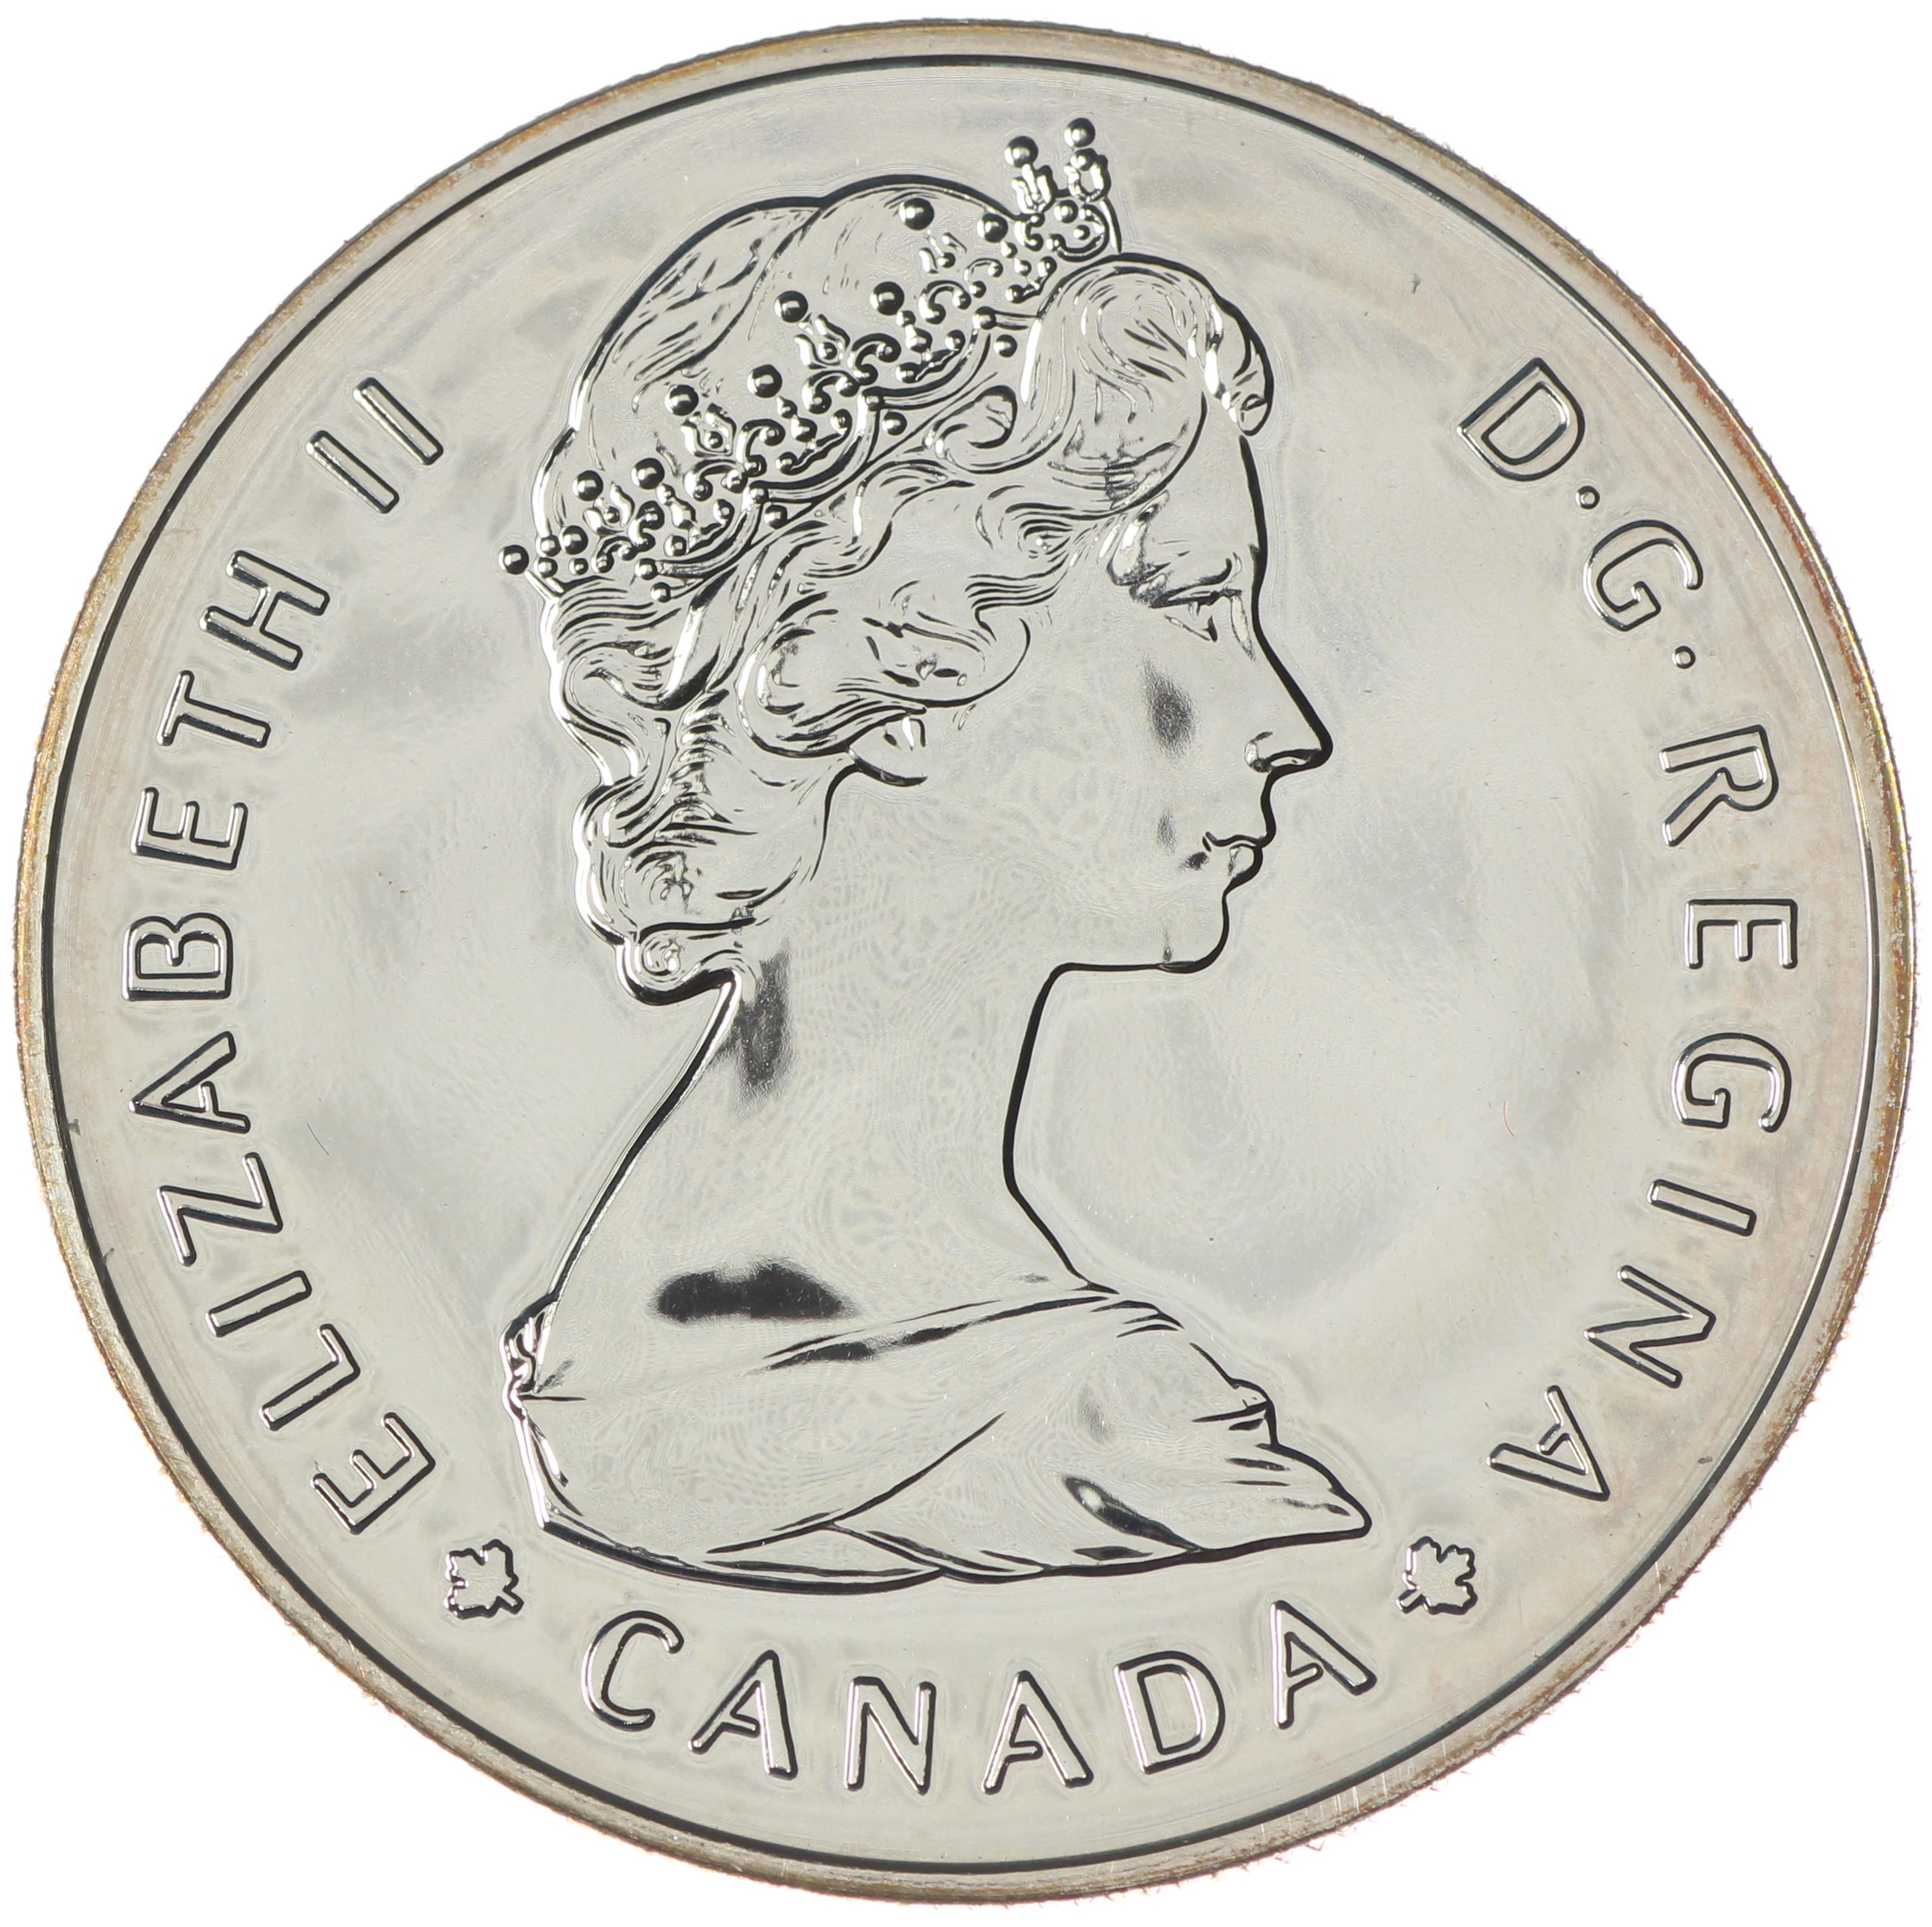 Канада набор 2 монеты 1 доллар 2022 Оскар Питерсон (обычная и цветная)